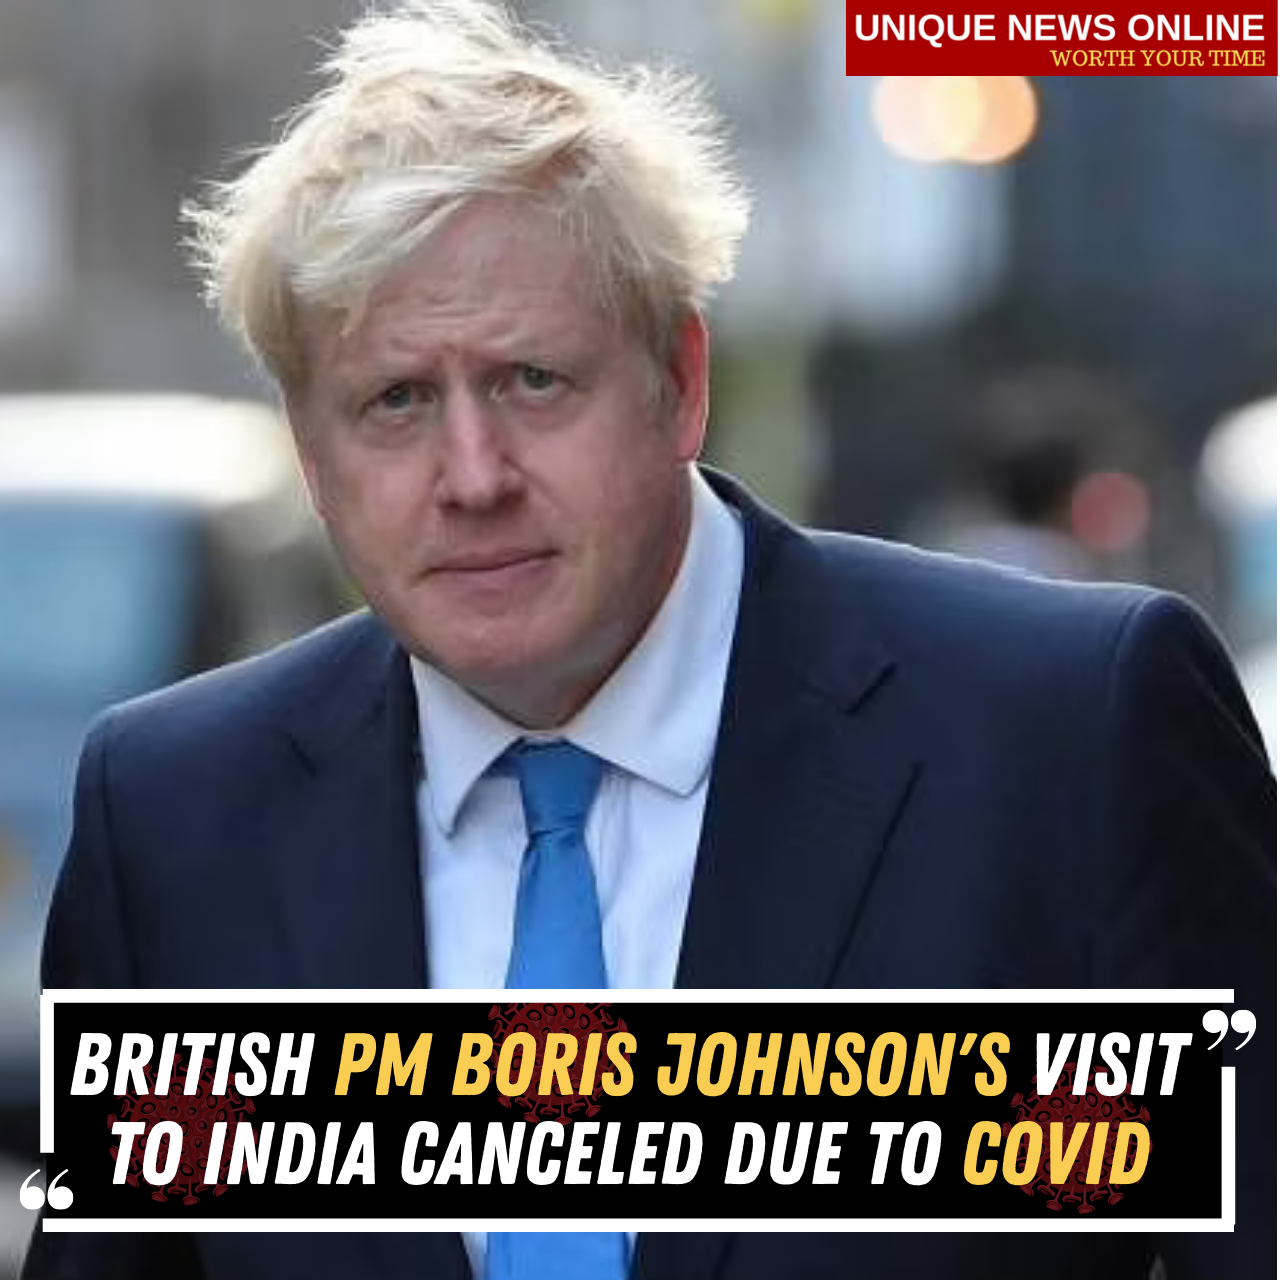 British PM Boris Johnson's visit to India canceled due to COVID